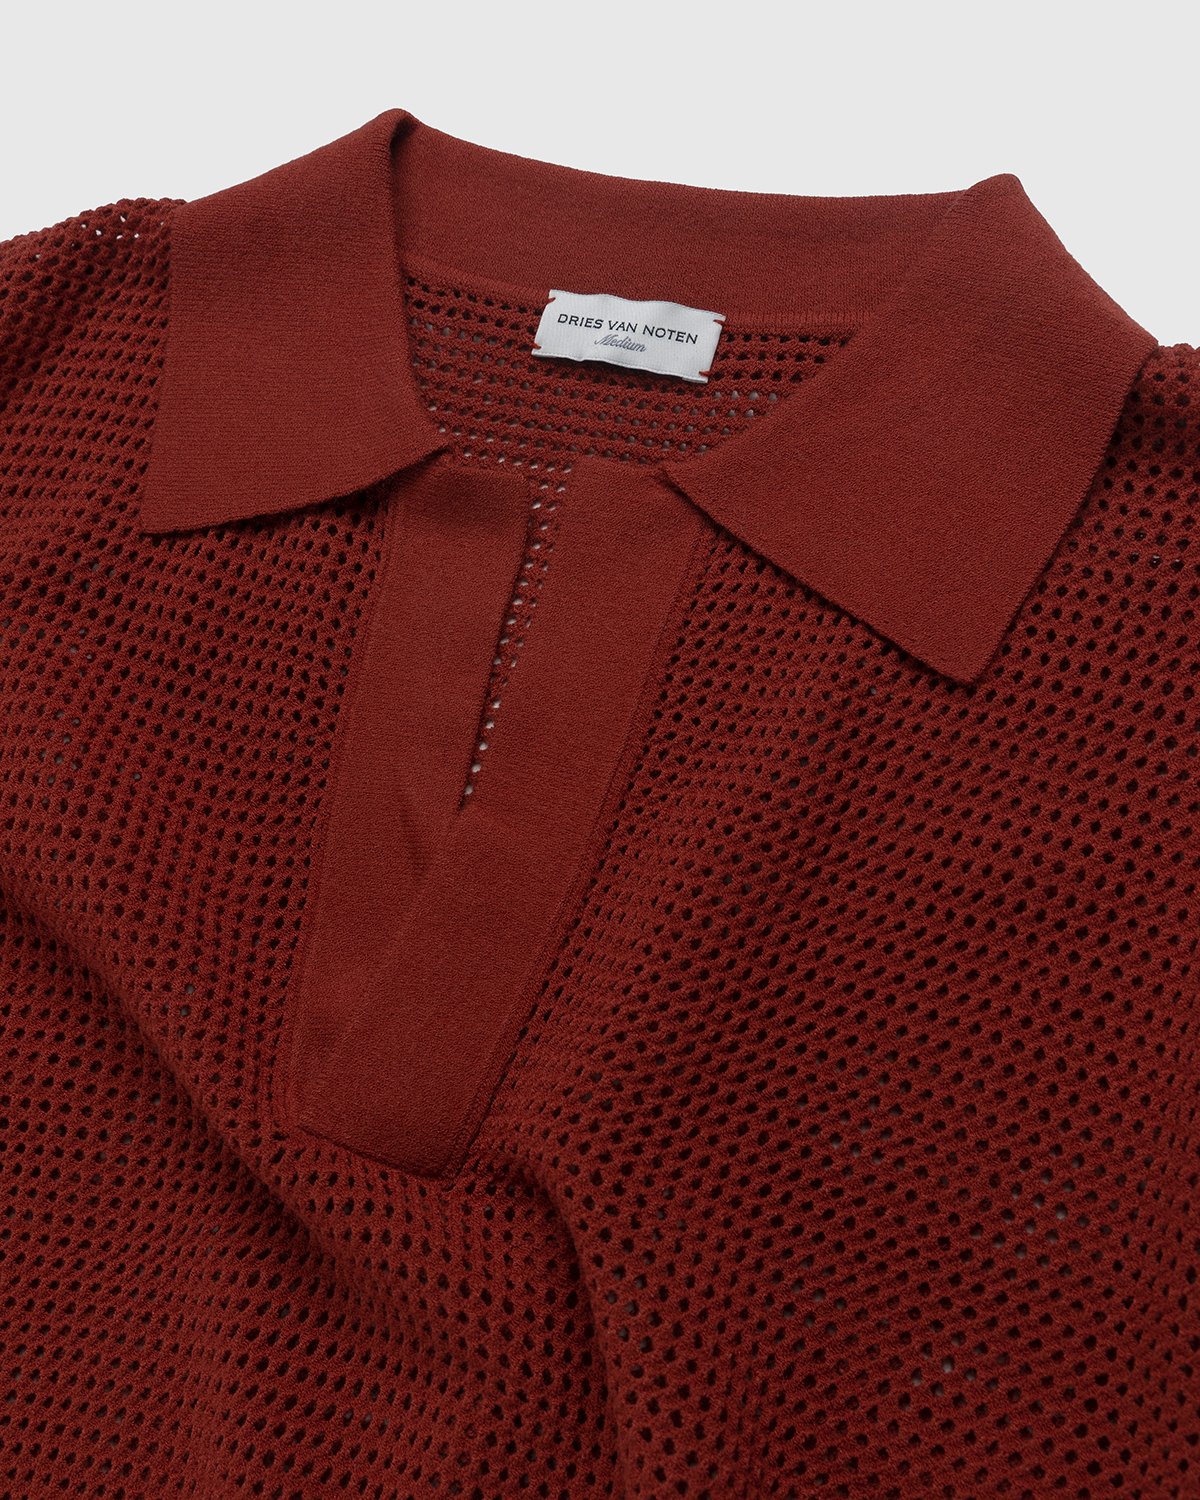 Dries van Noten - Jael Polo Shirt Brique - Clothing - Red - Image 3